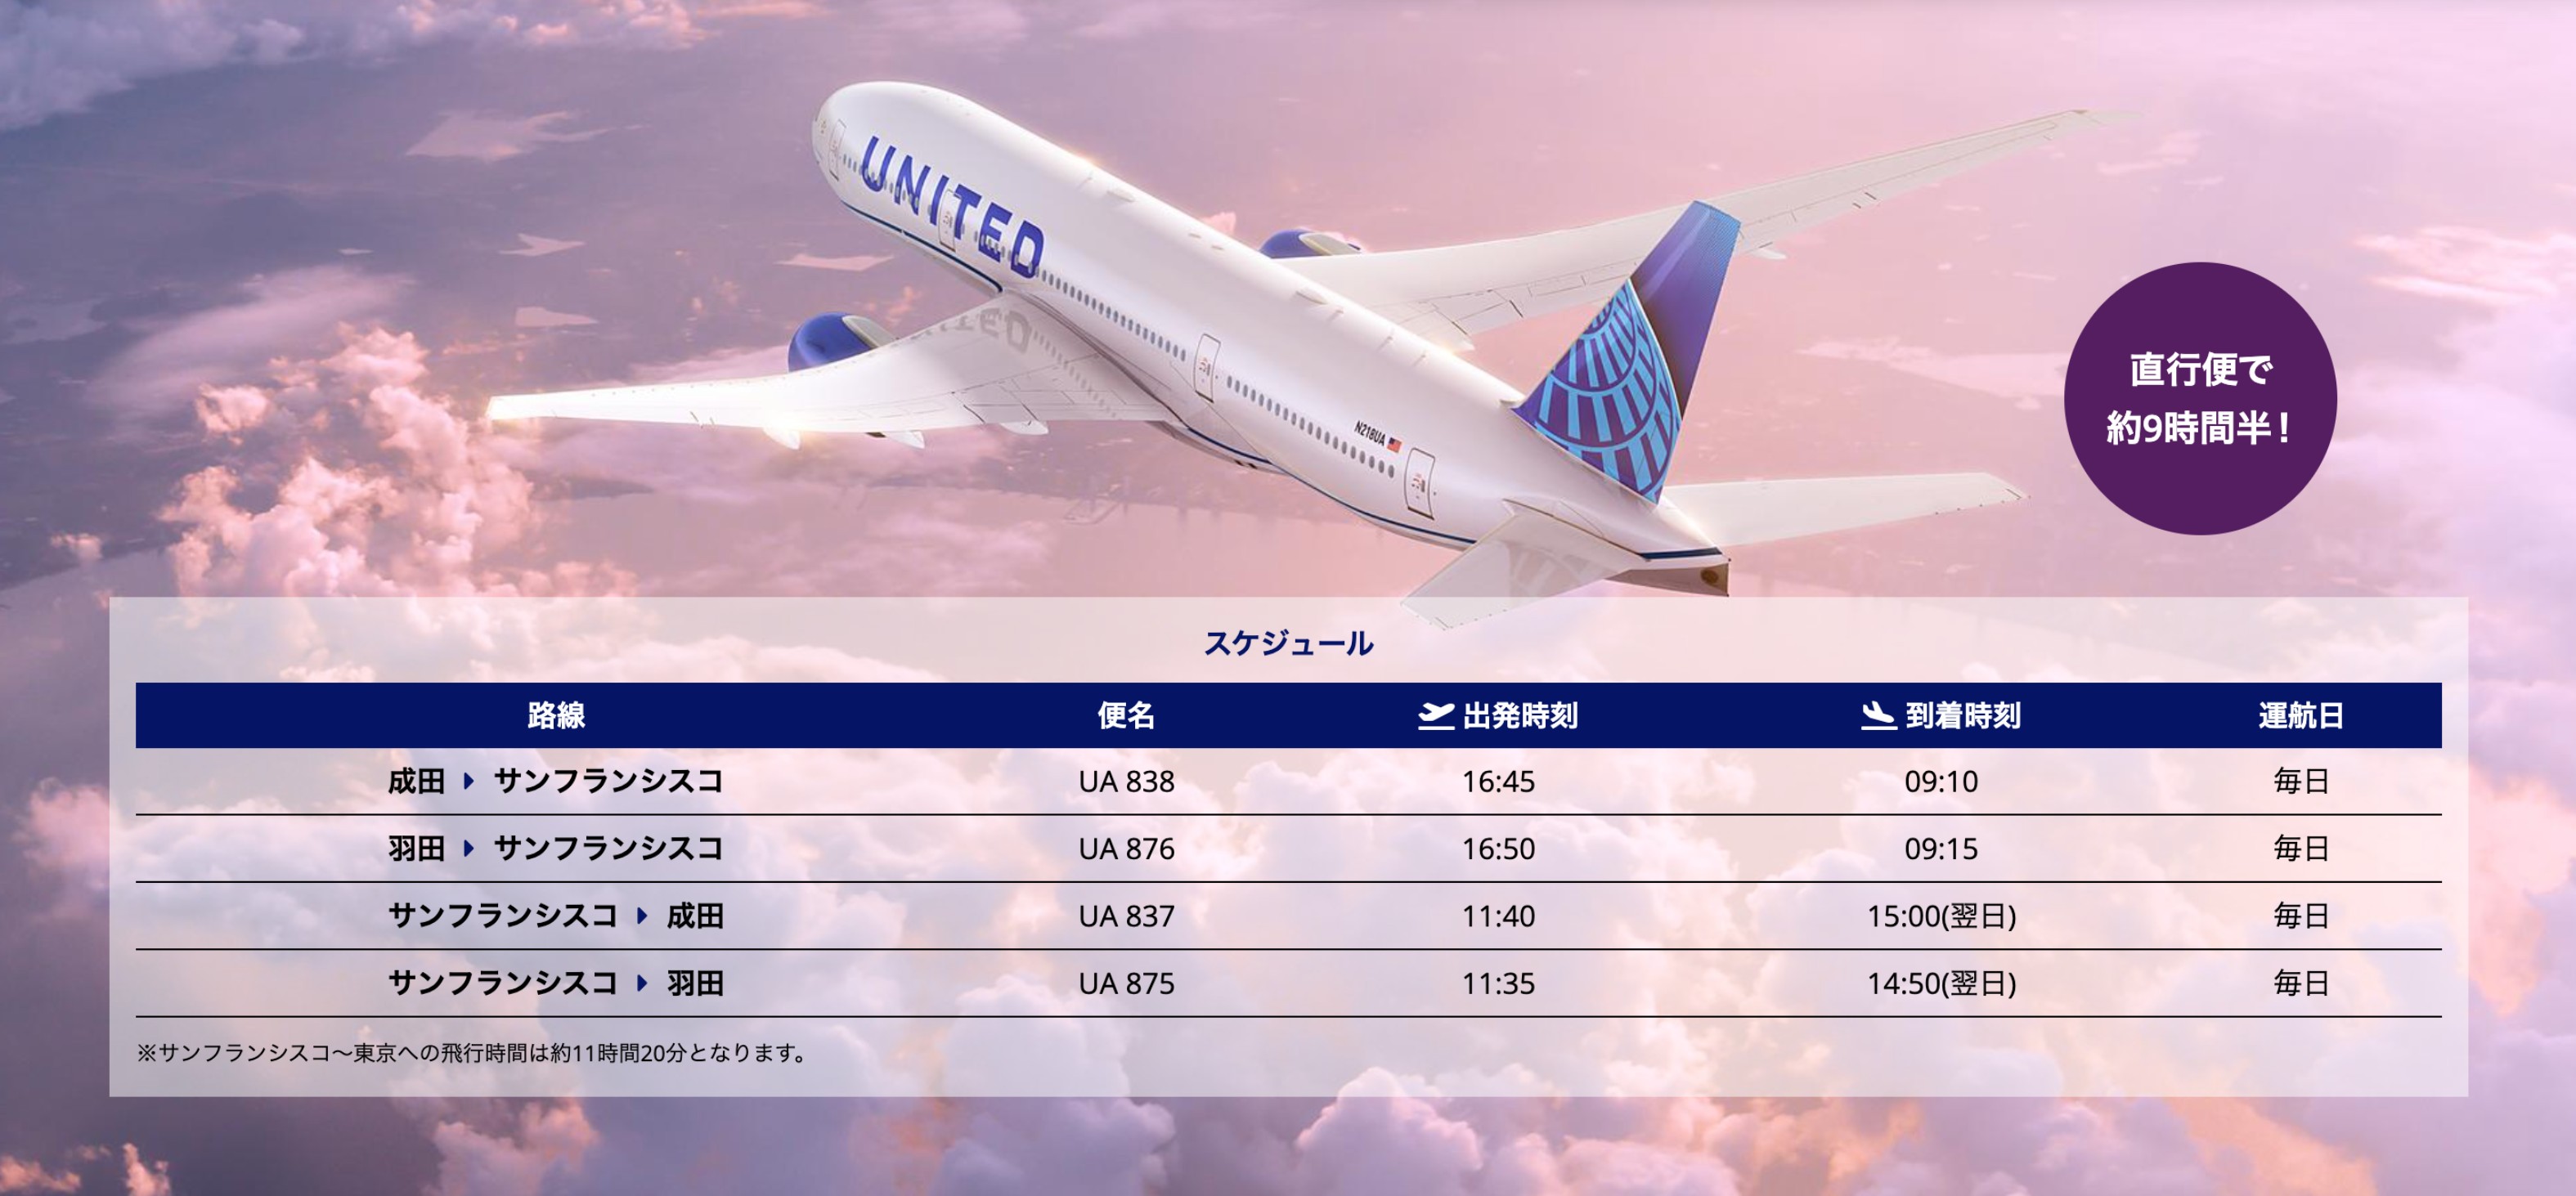 United Airline San Francisco Schedule